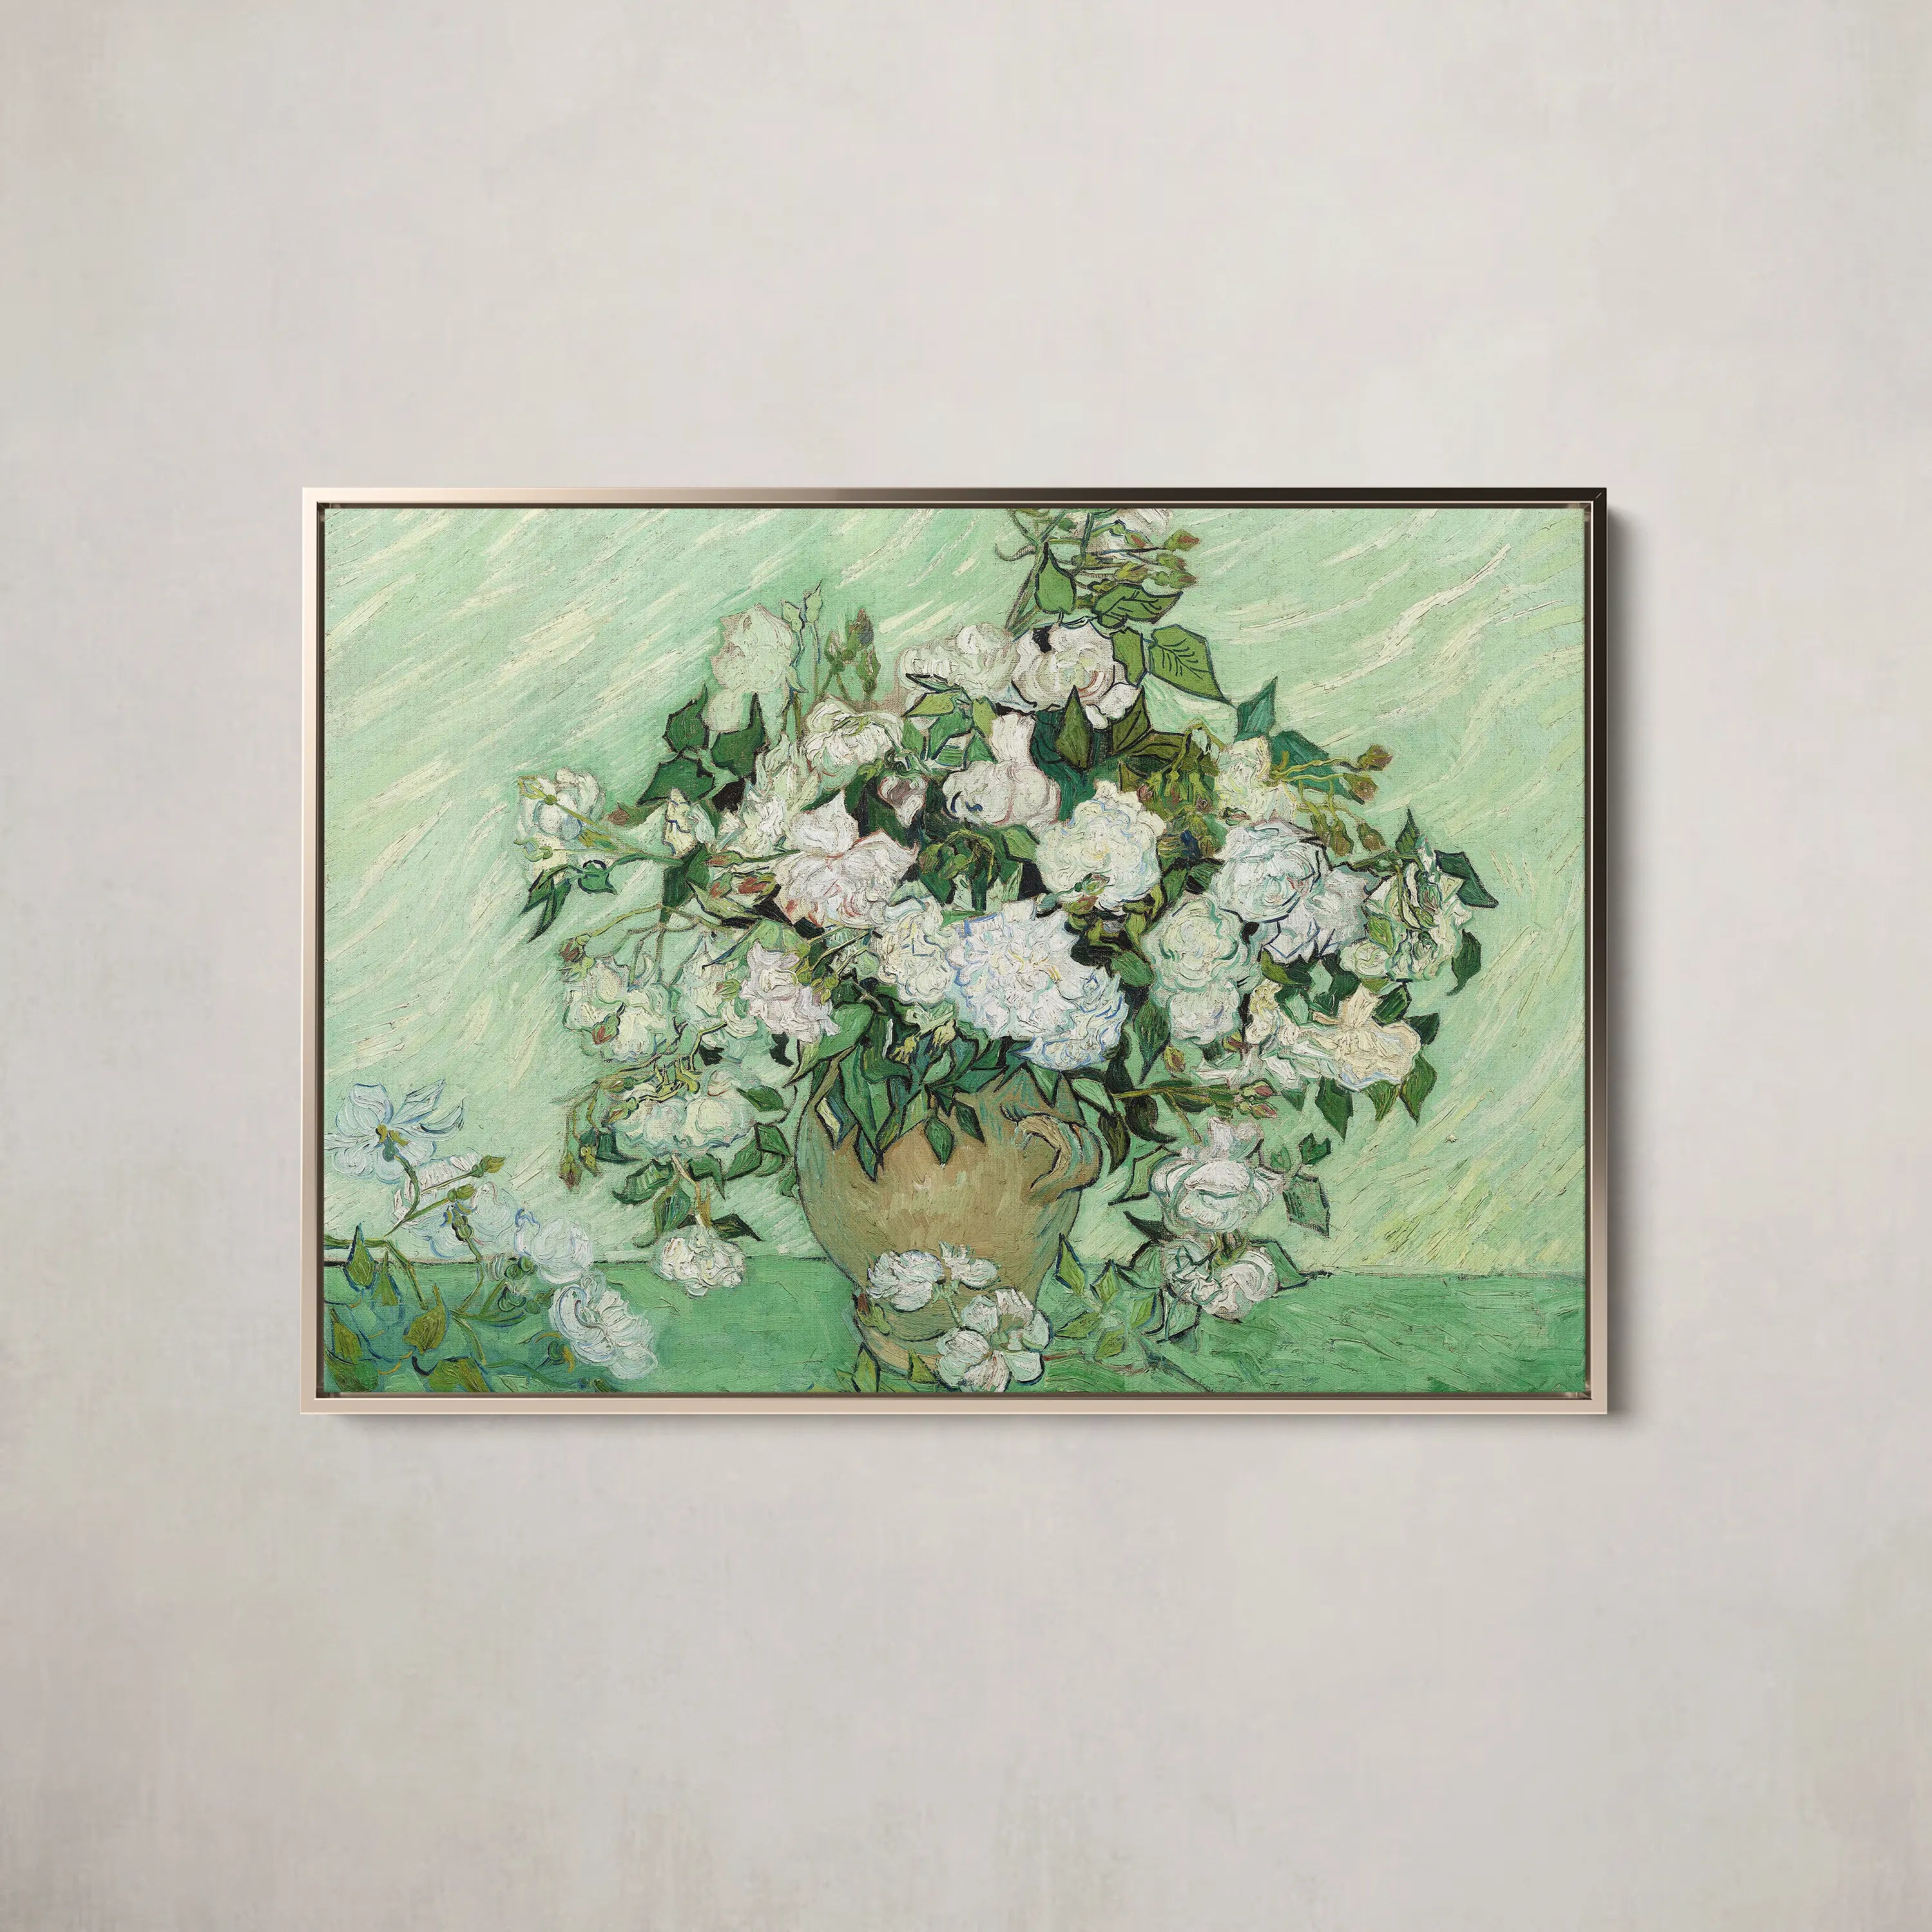 Roses (1890) by Vincent van Gogh